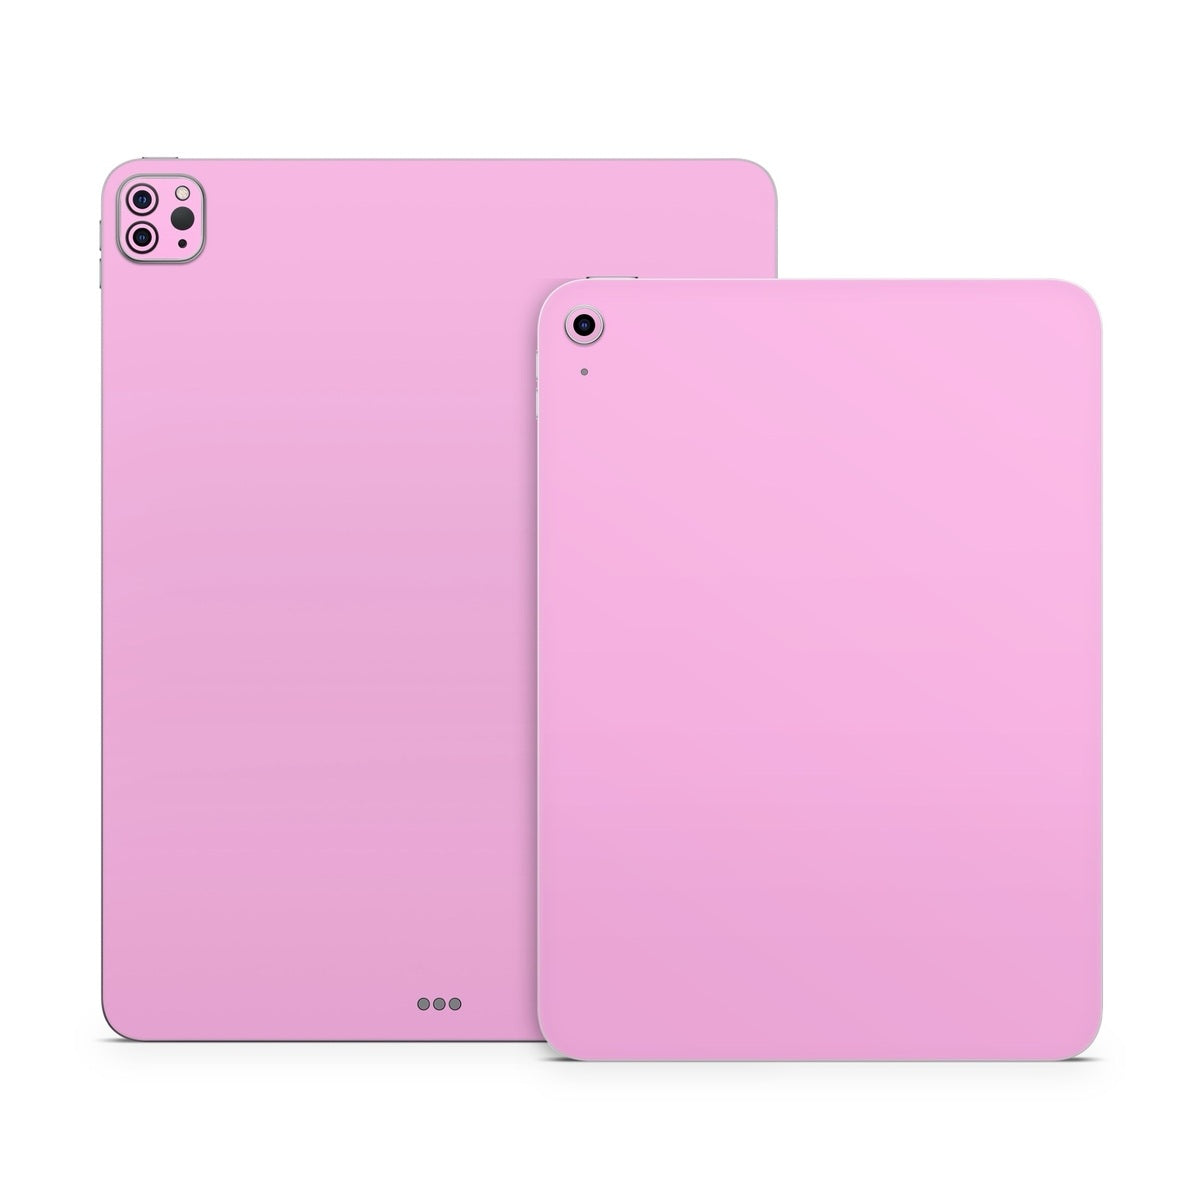 Solid State Pink - Apple iPad Skin